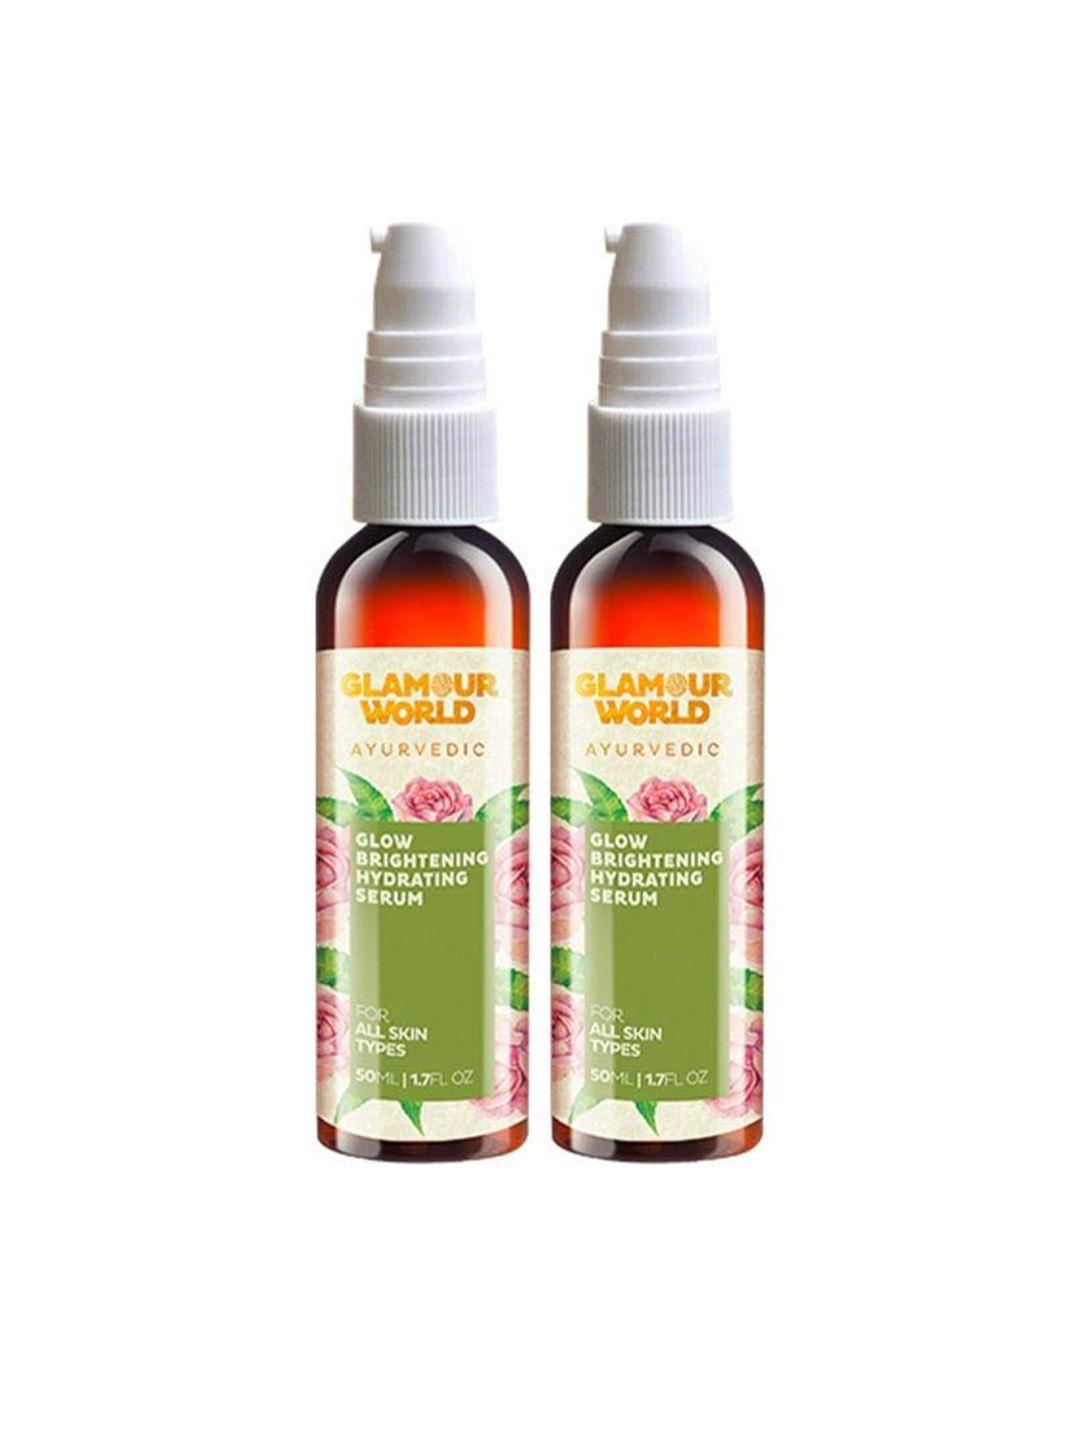 glamour world ayurvedic set of 2 glow brightening hydrating face serum- 50ml each